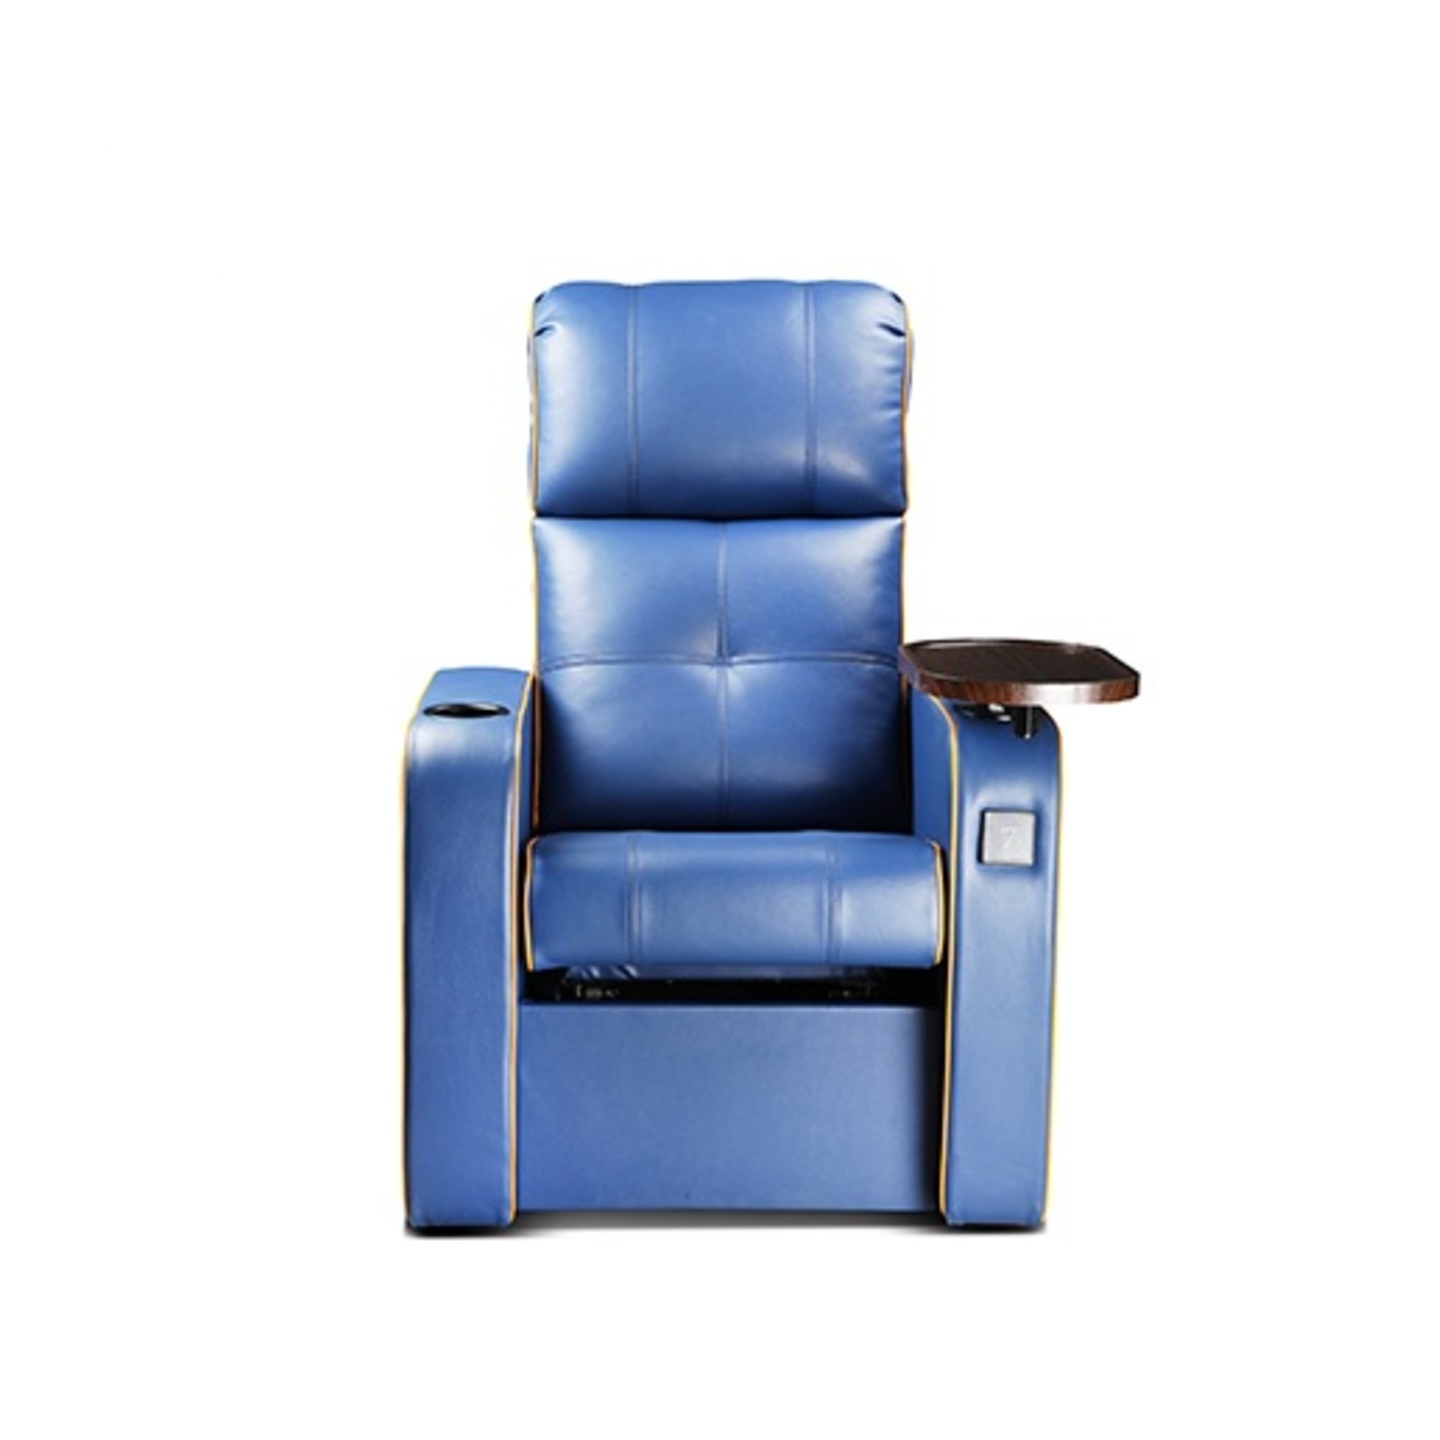 LN Recliner Chair Armonia Nx Manual System In Blue Colour